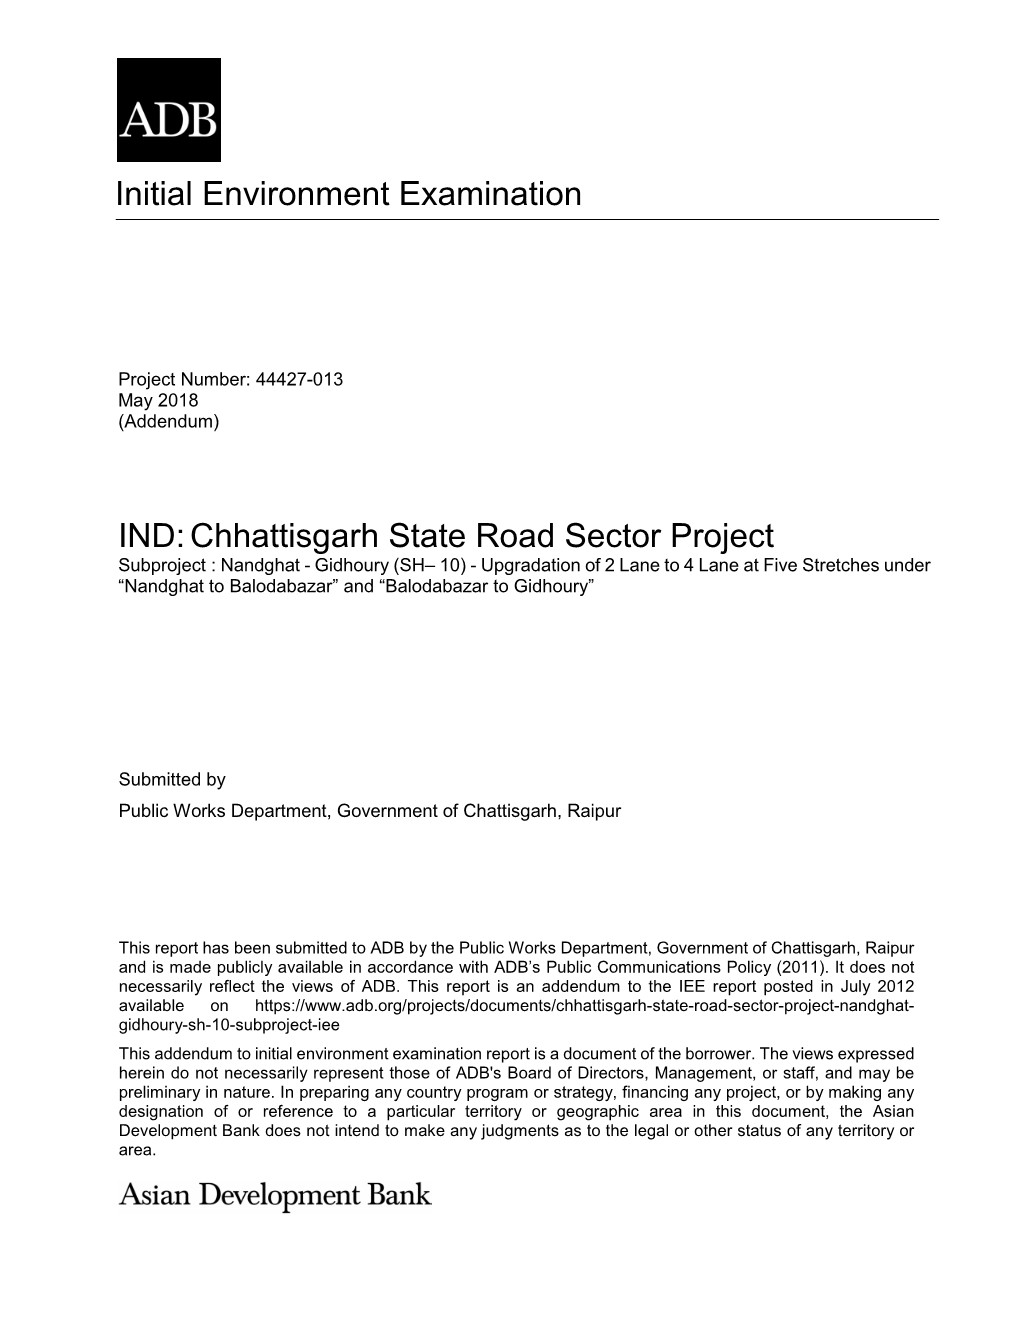 Chhattisgarh State Road Sector Project